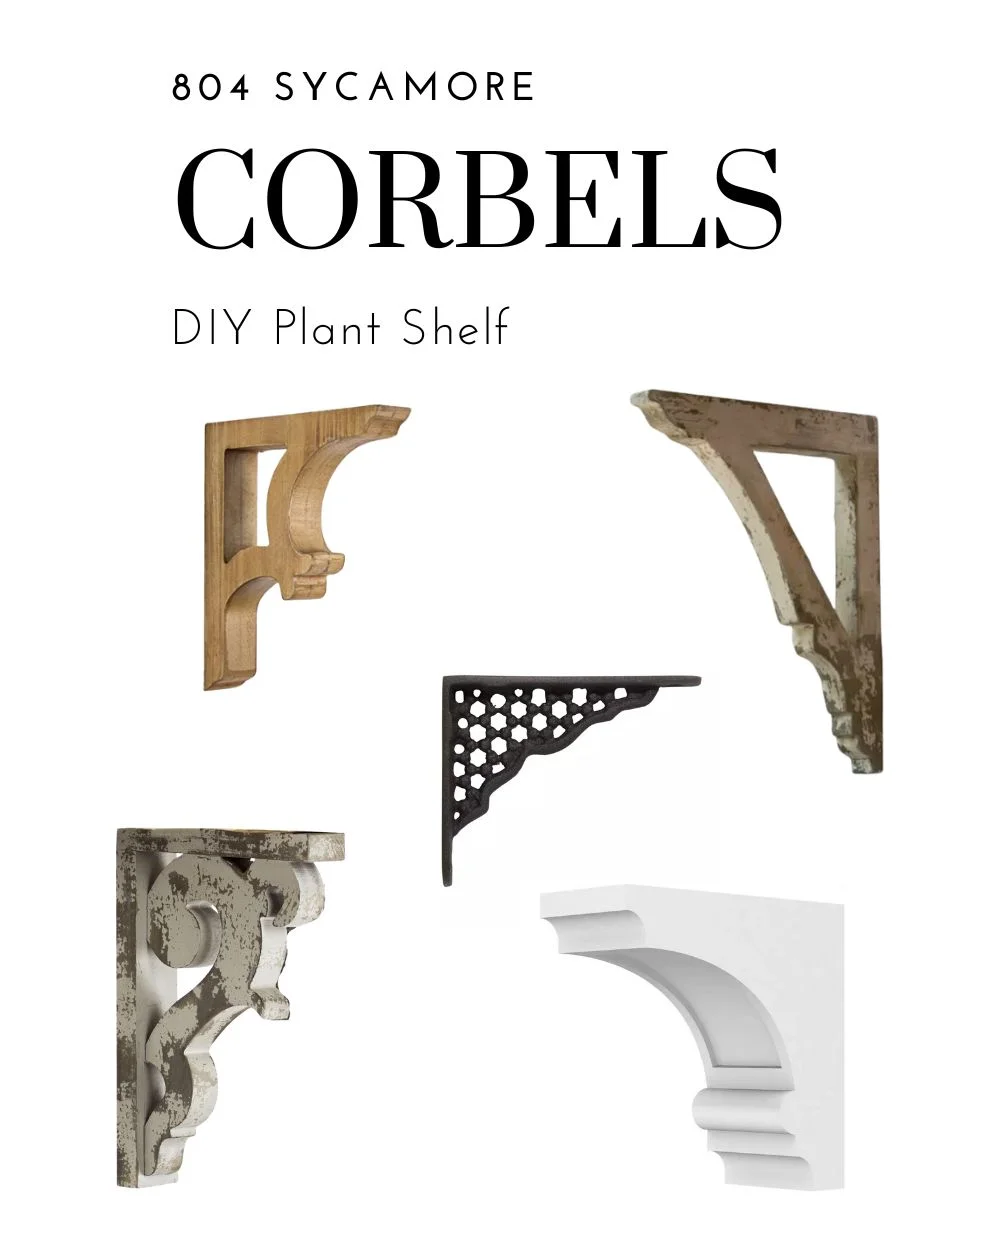 examples of corbels